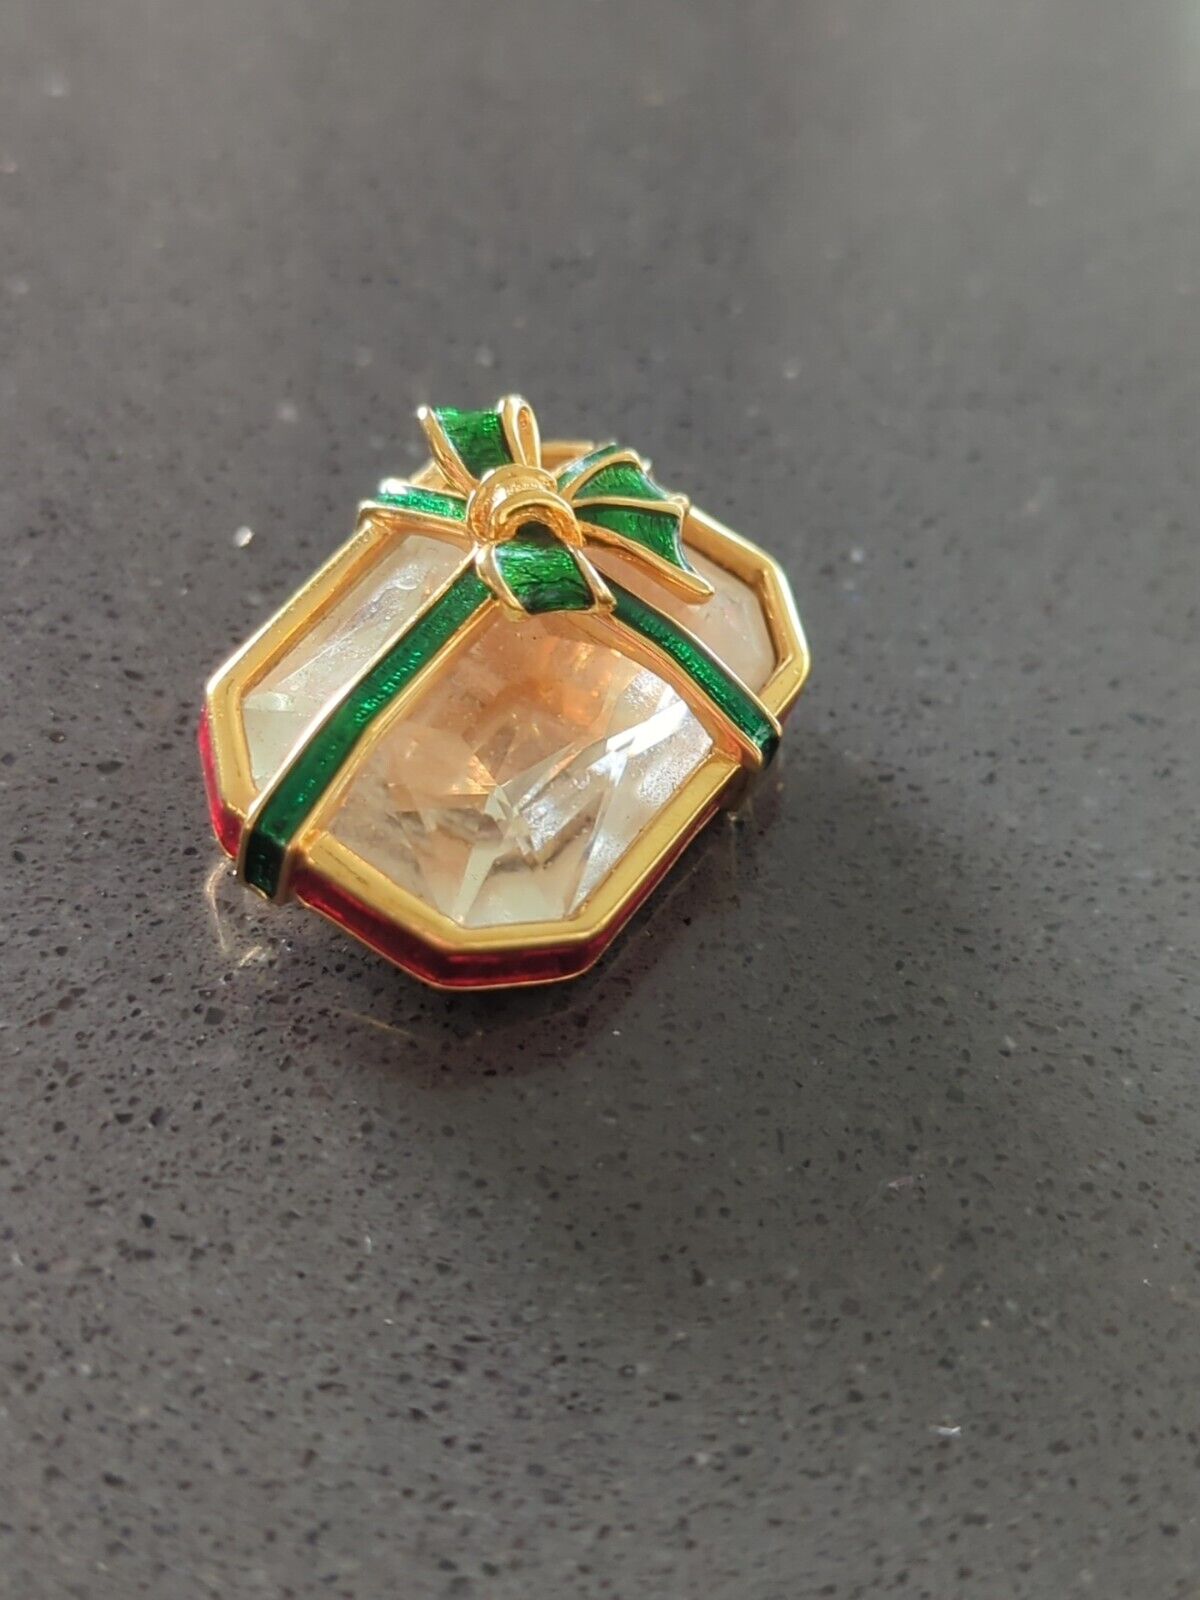 Signed Swarovski Faceted Crystal w/ Enamel Trim Gold-Tone Pin Brooch